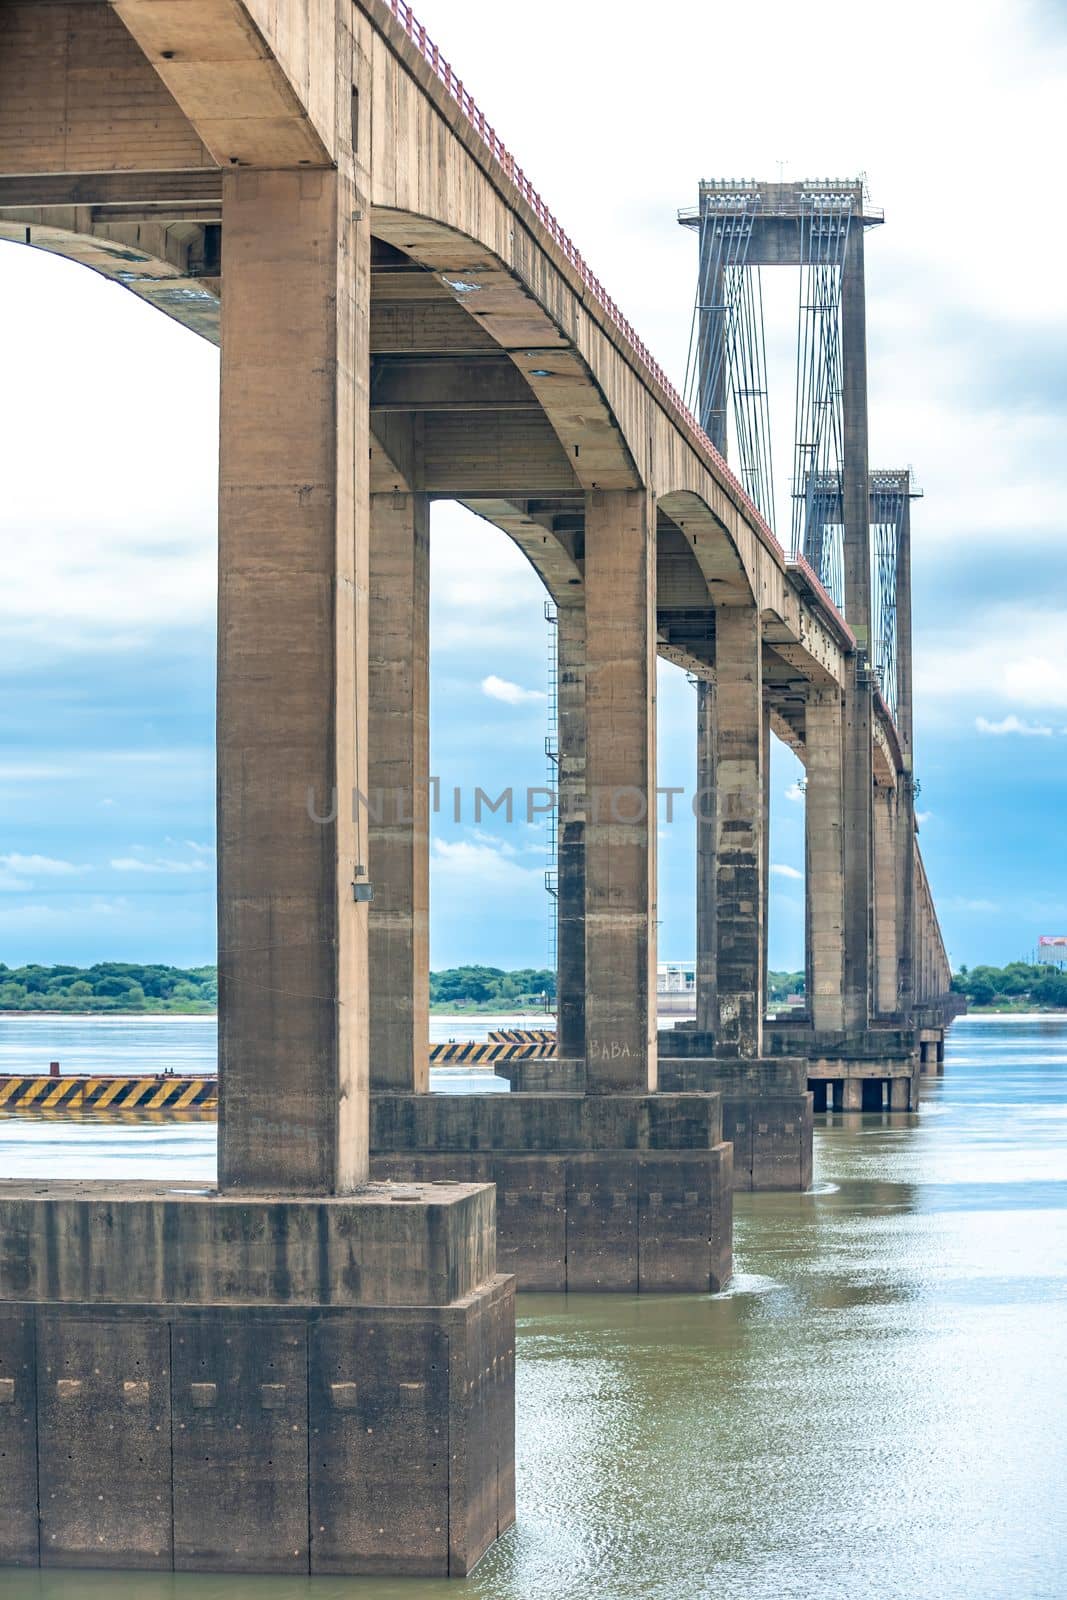 General Belgrano Bridge in Argentina on the Parana River by Edophoto